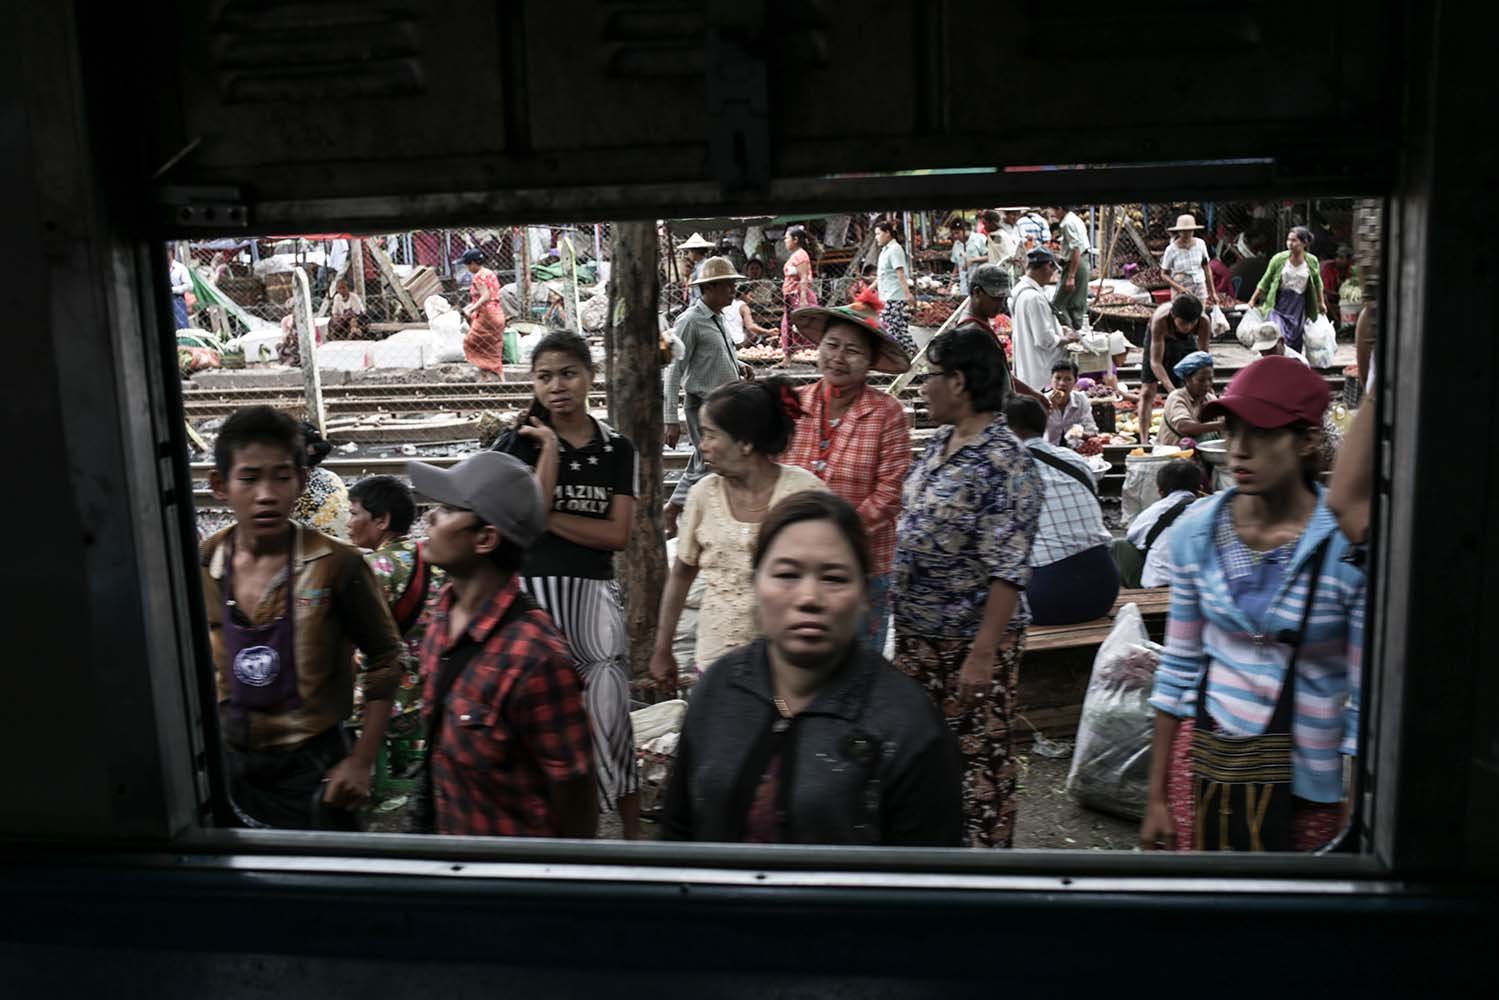 Suasana keseharian di stasiun dan diatas kereta melingkar (circular train) yang melayani trayek mengelilingi Yangon, Myanmar.